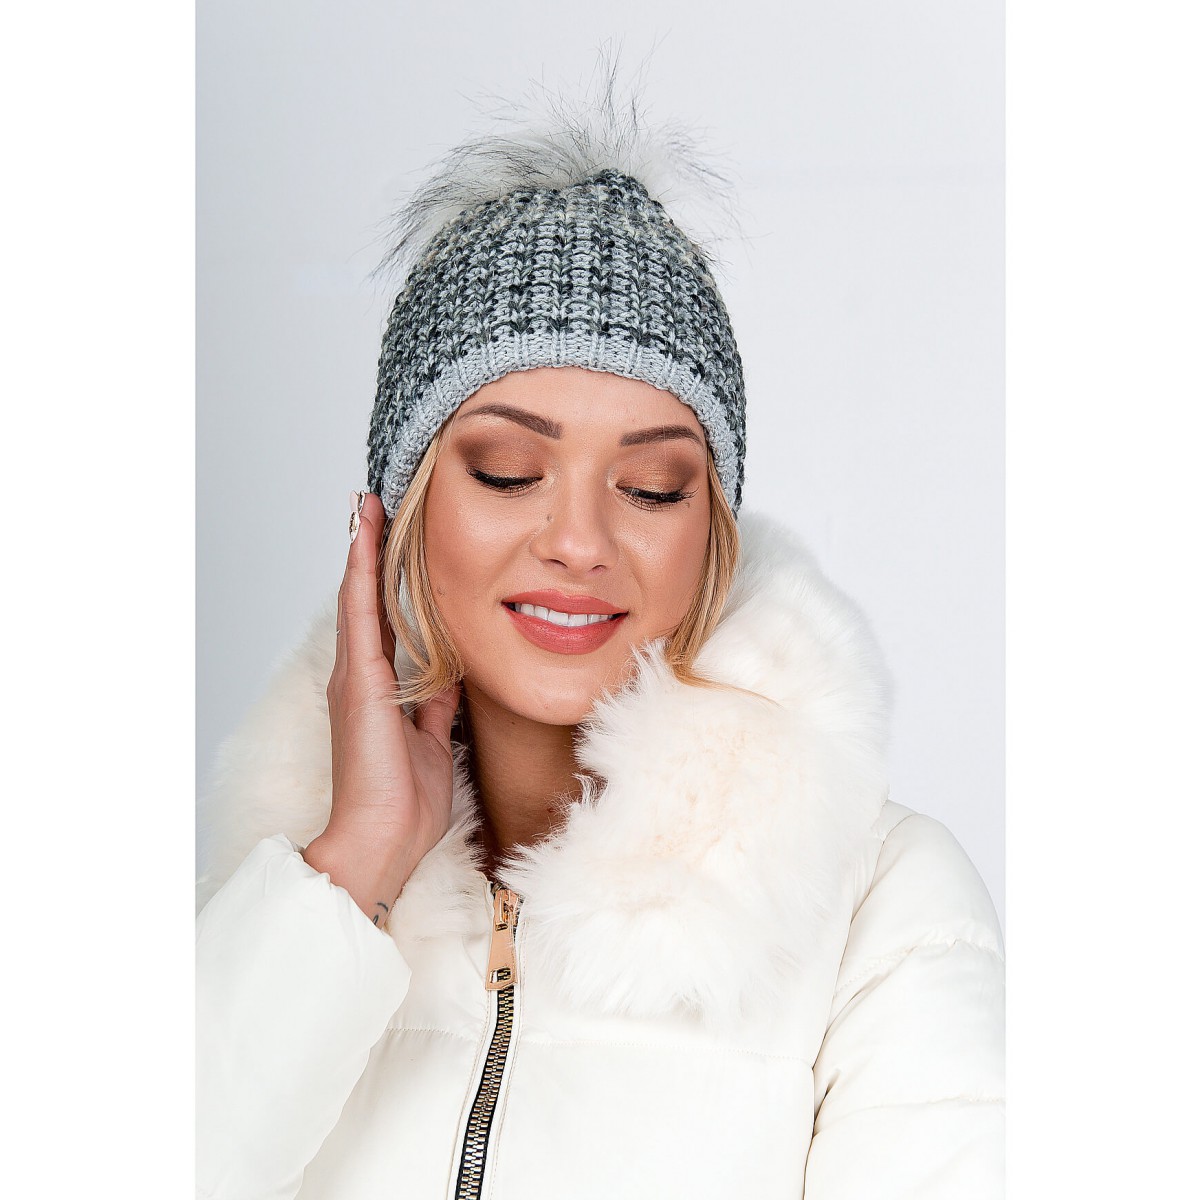 Lady's Winter Cap With Pompom - Gray,